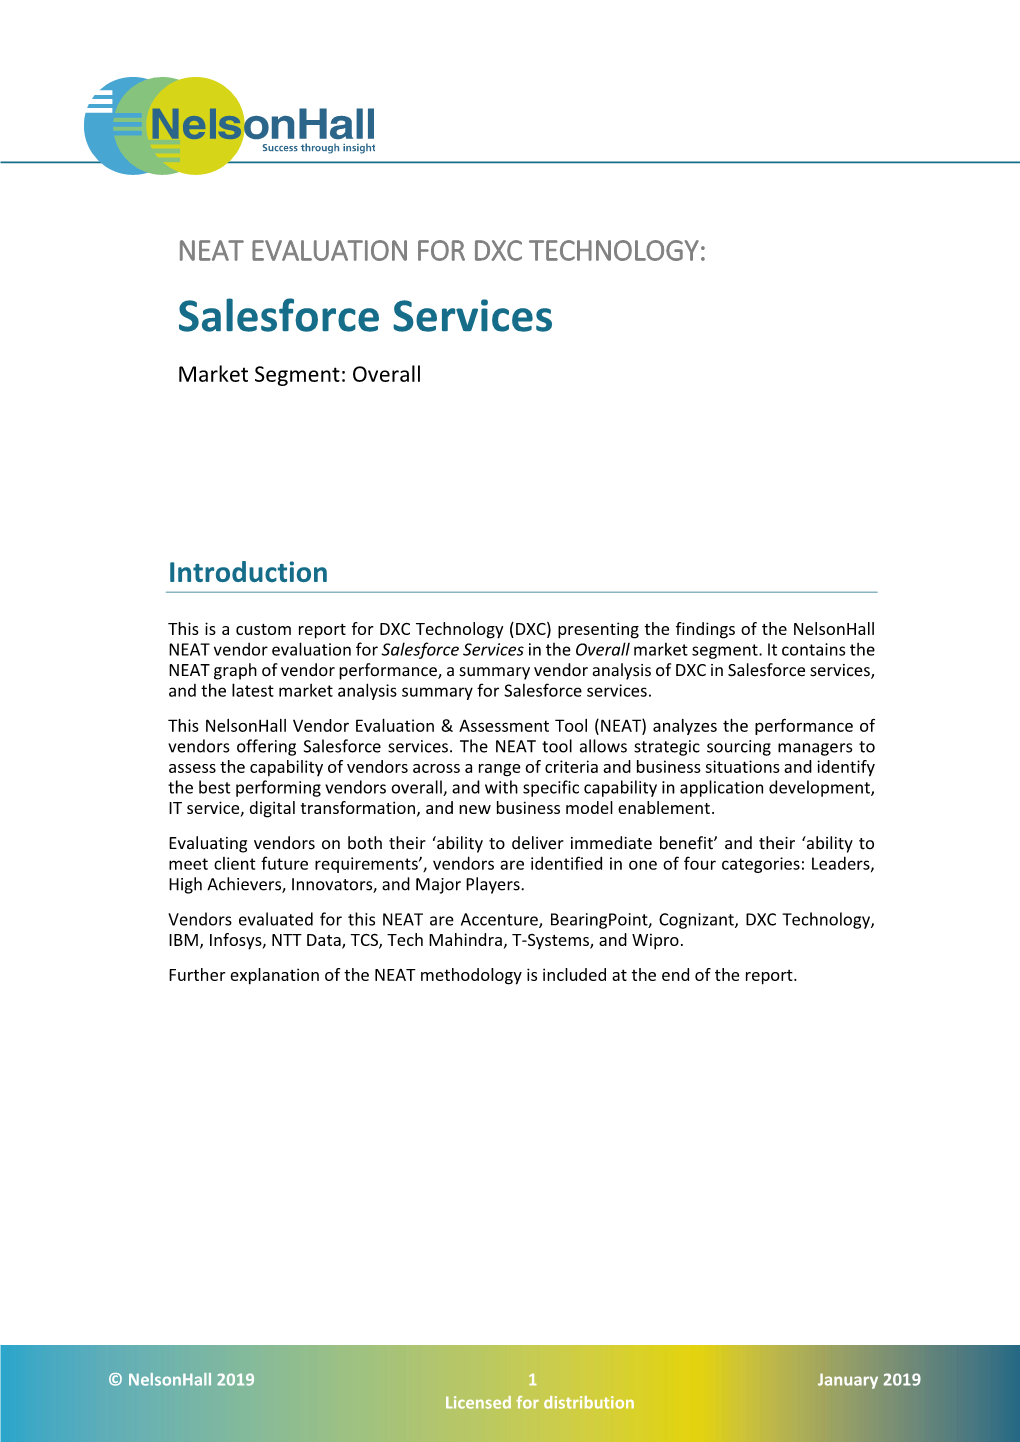 Salesforce Services Market Segment: Overall